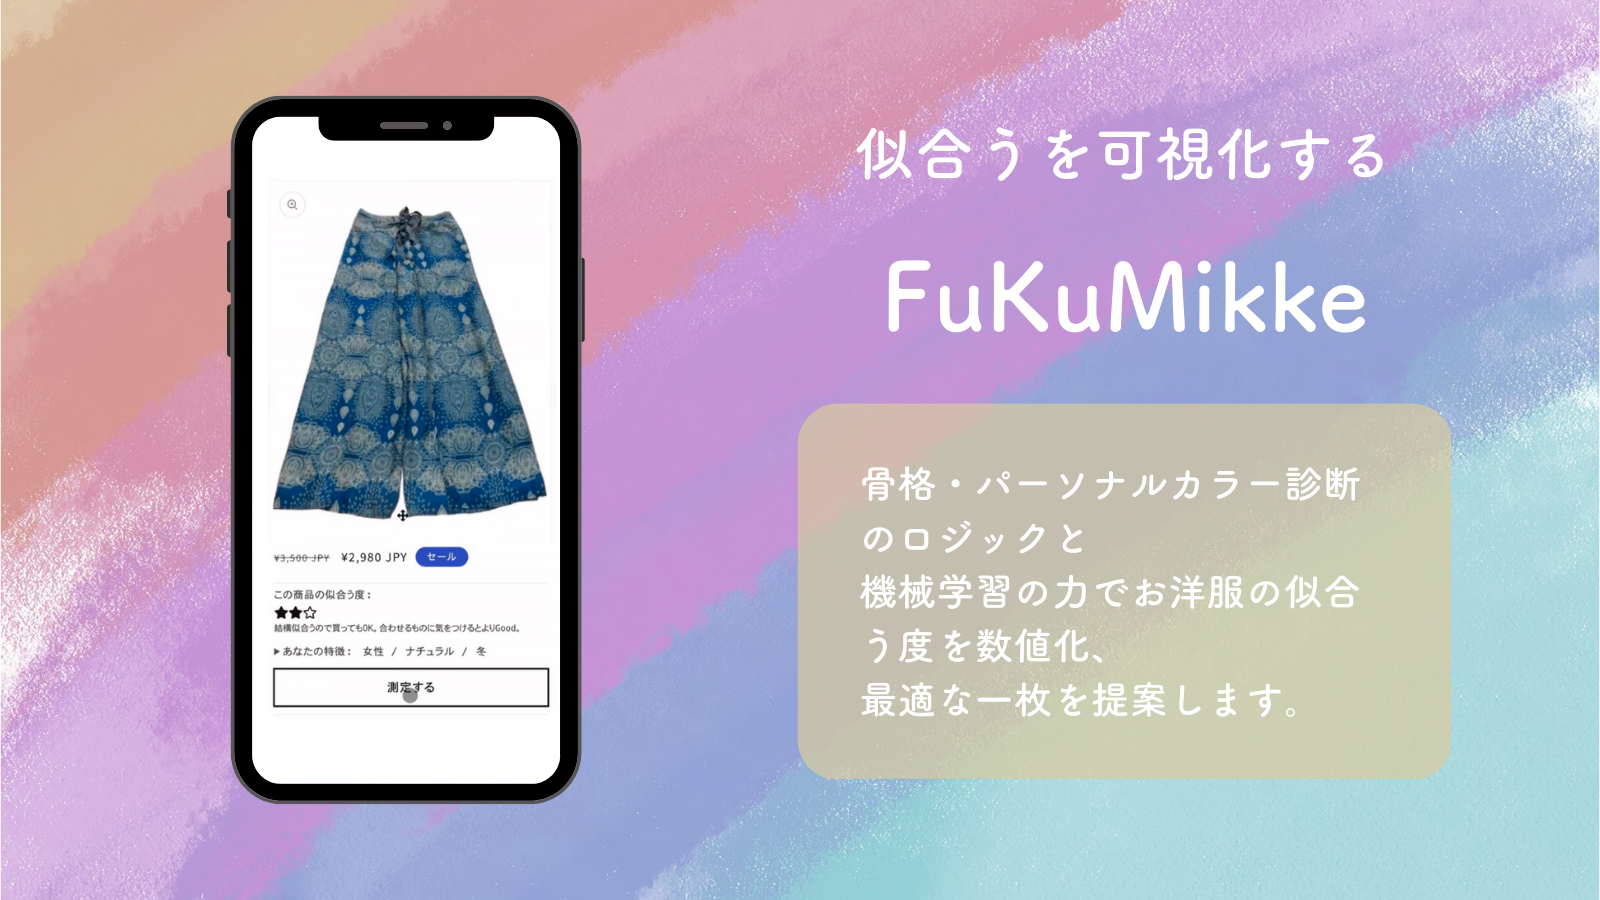 Instruções do App FuKuMikke